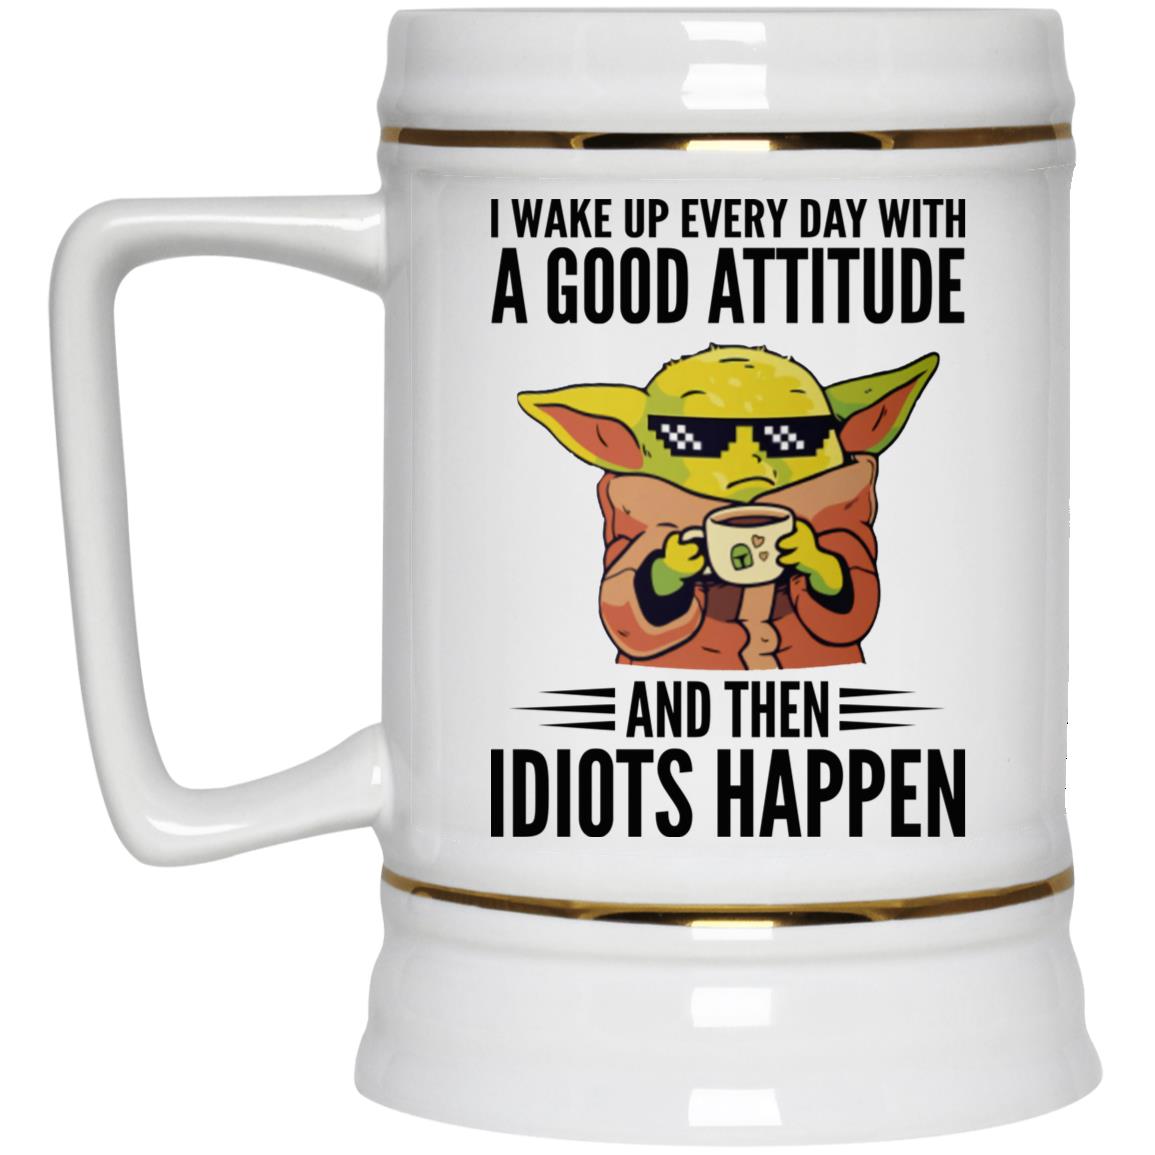 Baby Yoda My Four Moods Mug